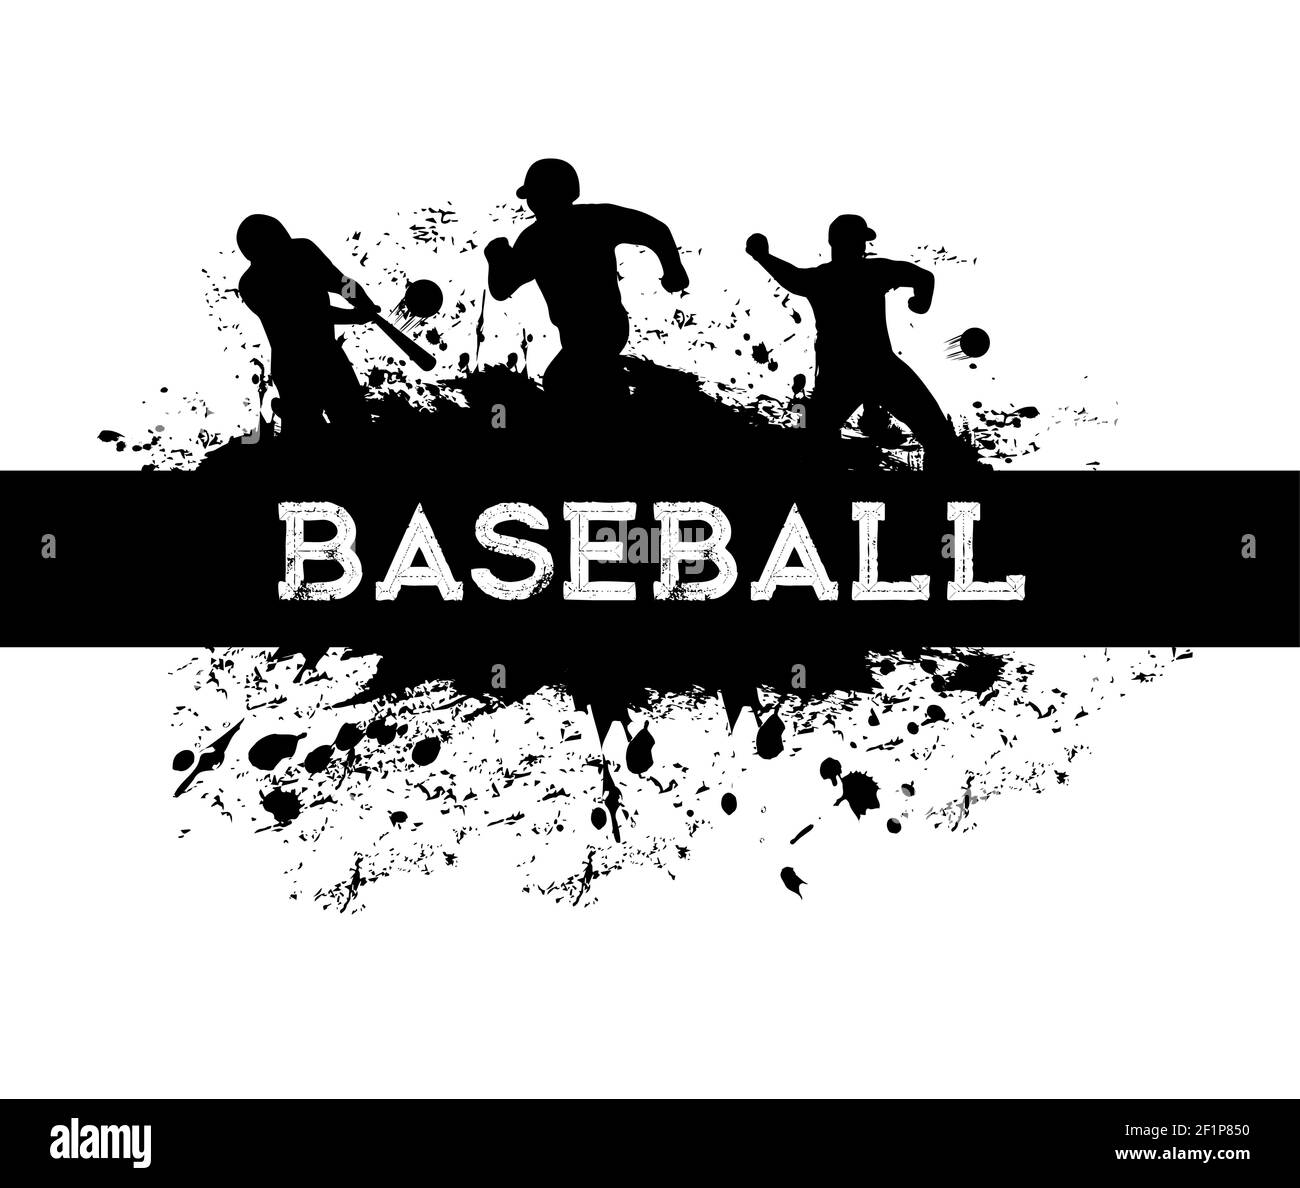 Baseball sport player with bat and ball vector black silhouettes. Baseball team catcher, batter, pitcher and runner pitching, hitting and catching, ba Stock Vector